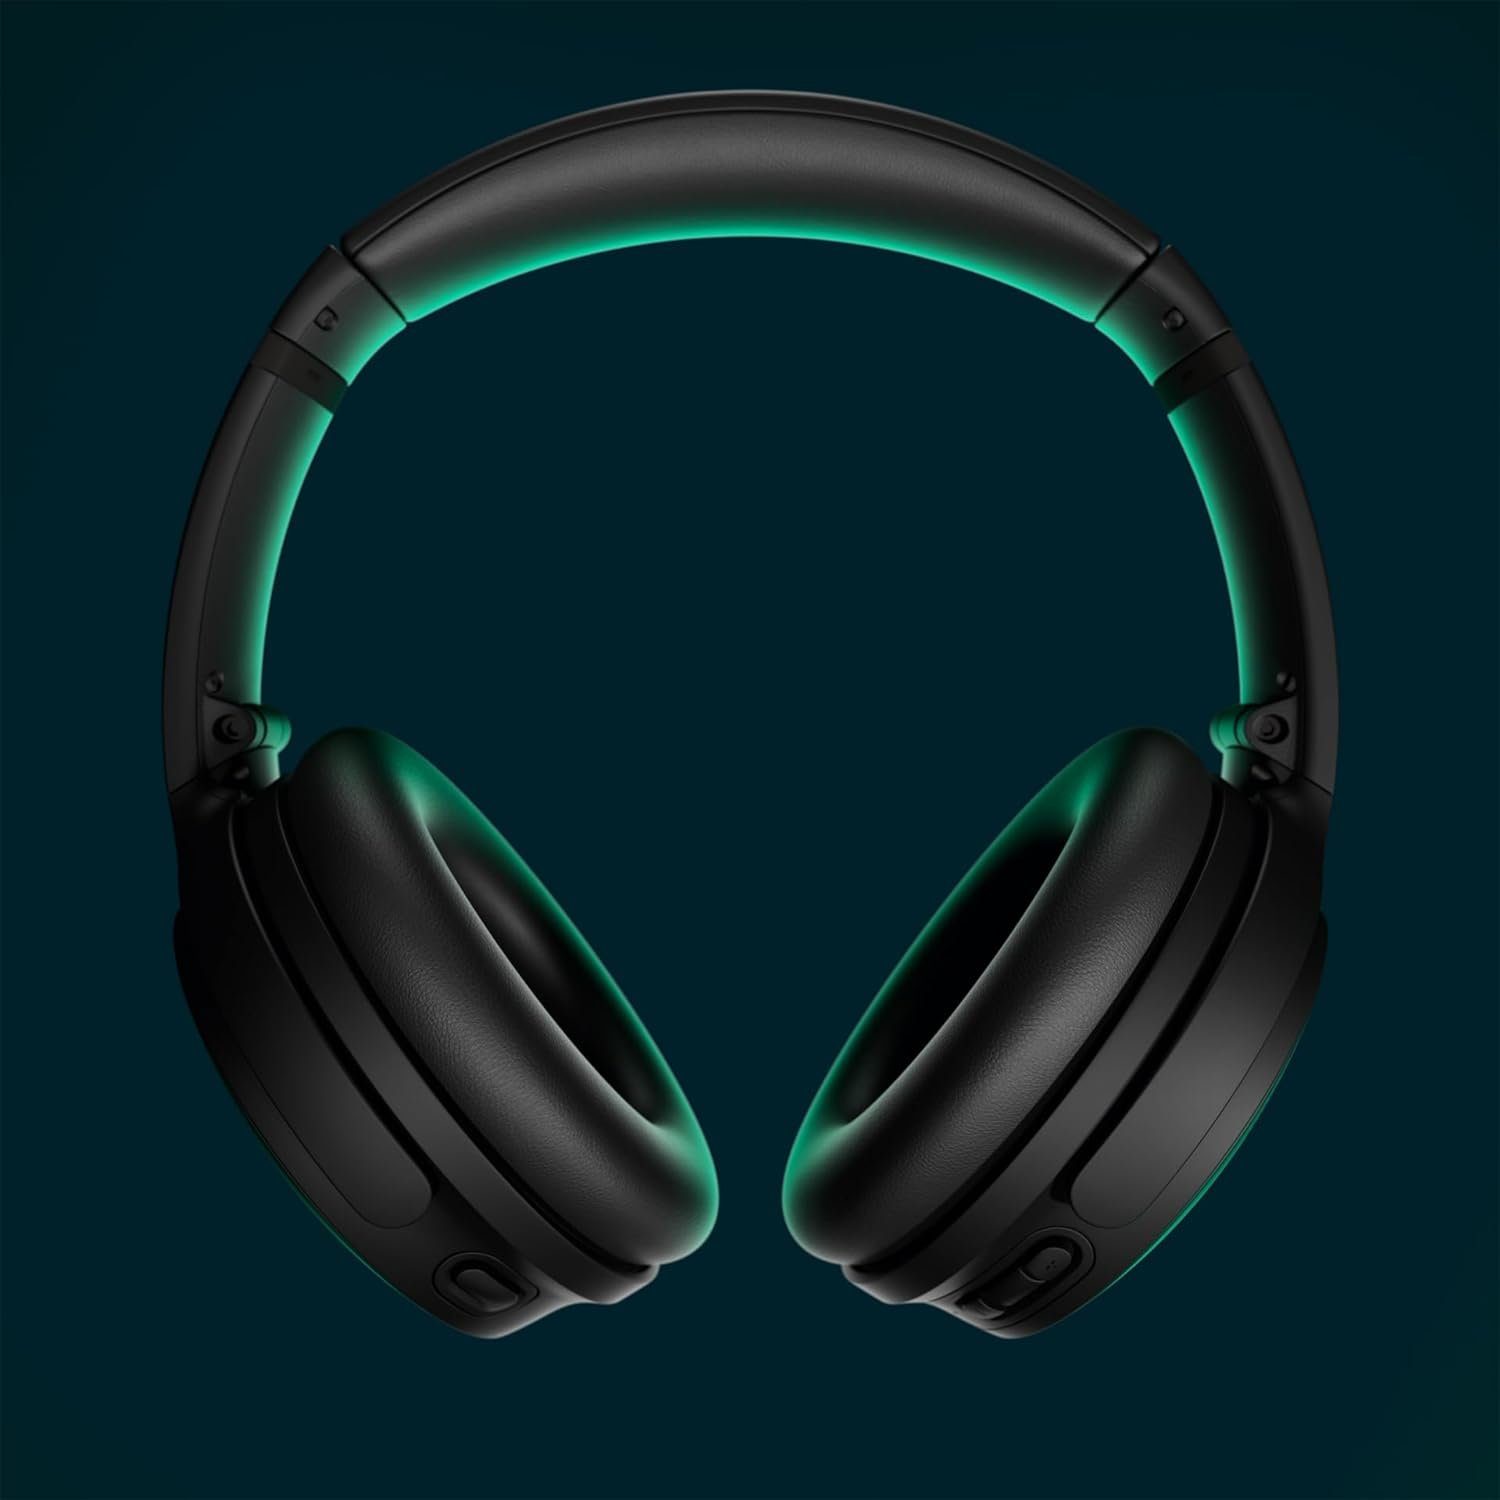 Kopfhörer Black Noise-Cancelling, mit Bluetooth mit (Nahtlose Bluetooth, Over-Ear-Kopfhörer) Verbindung Geräten, Shark bevorzugten Gaming-Headset Kabellose